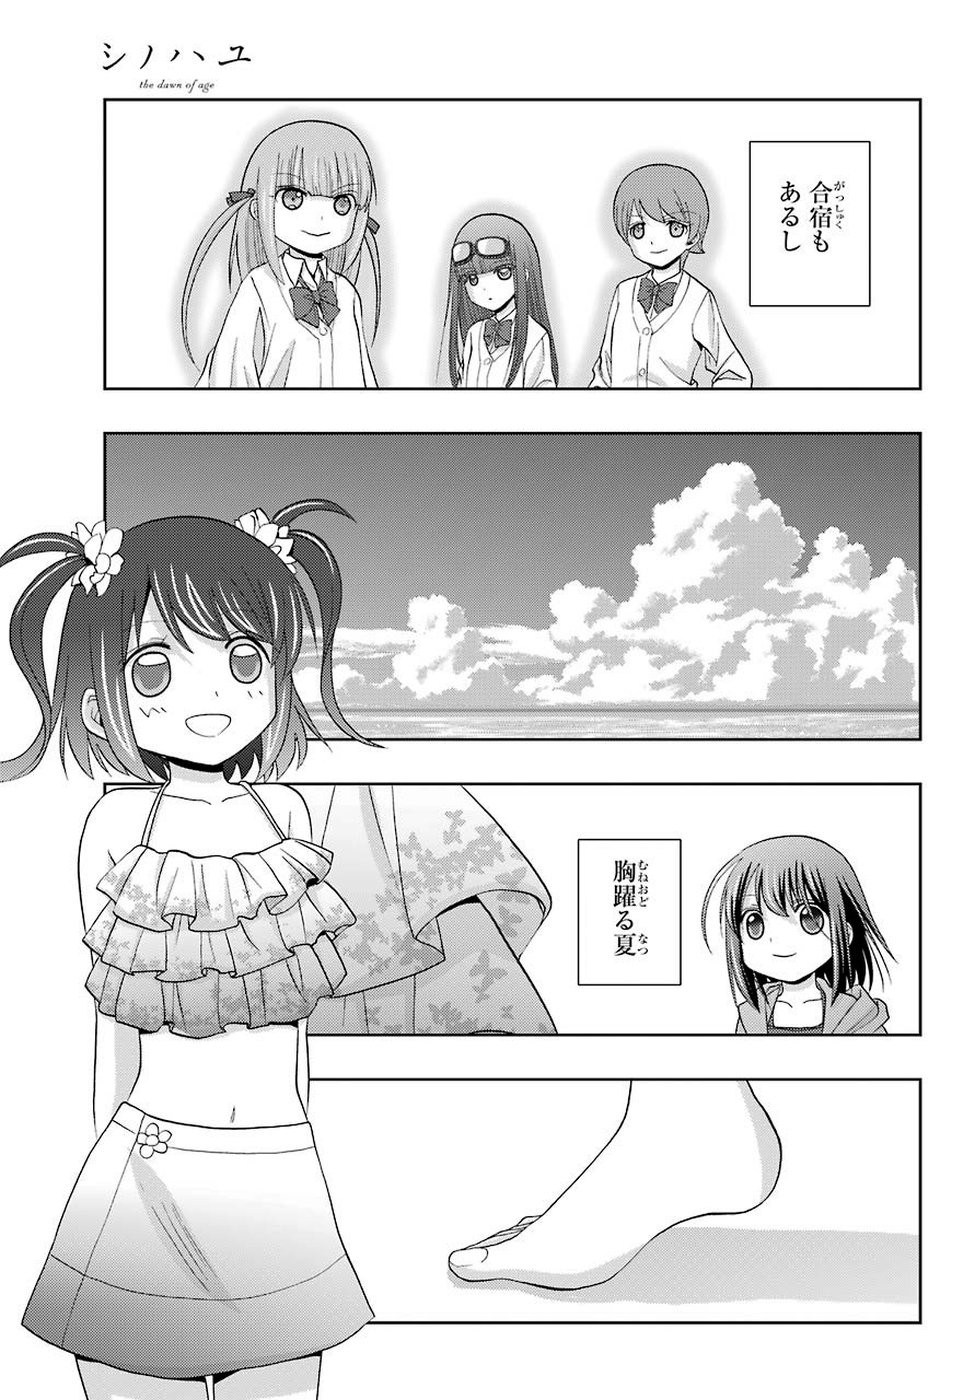 Shinohayu - The Dawn of Age Manga - Chapter 072 - Page 27